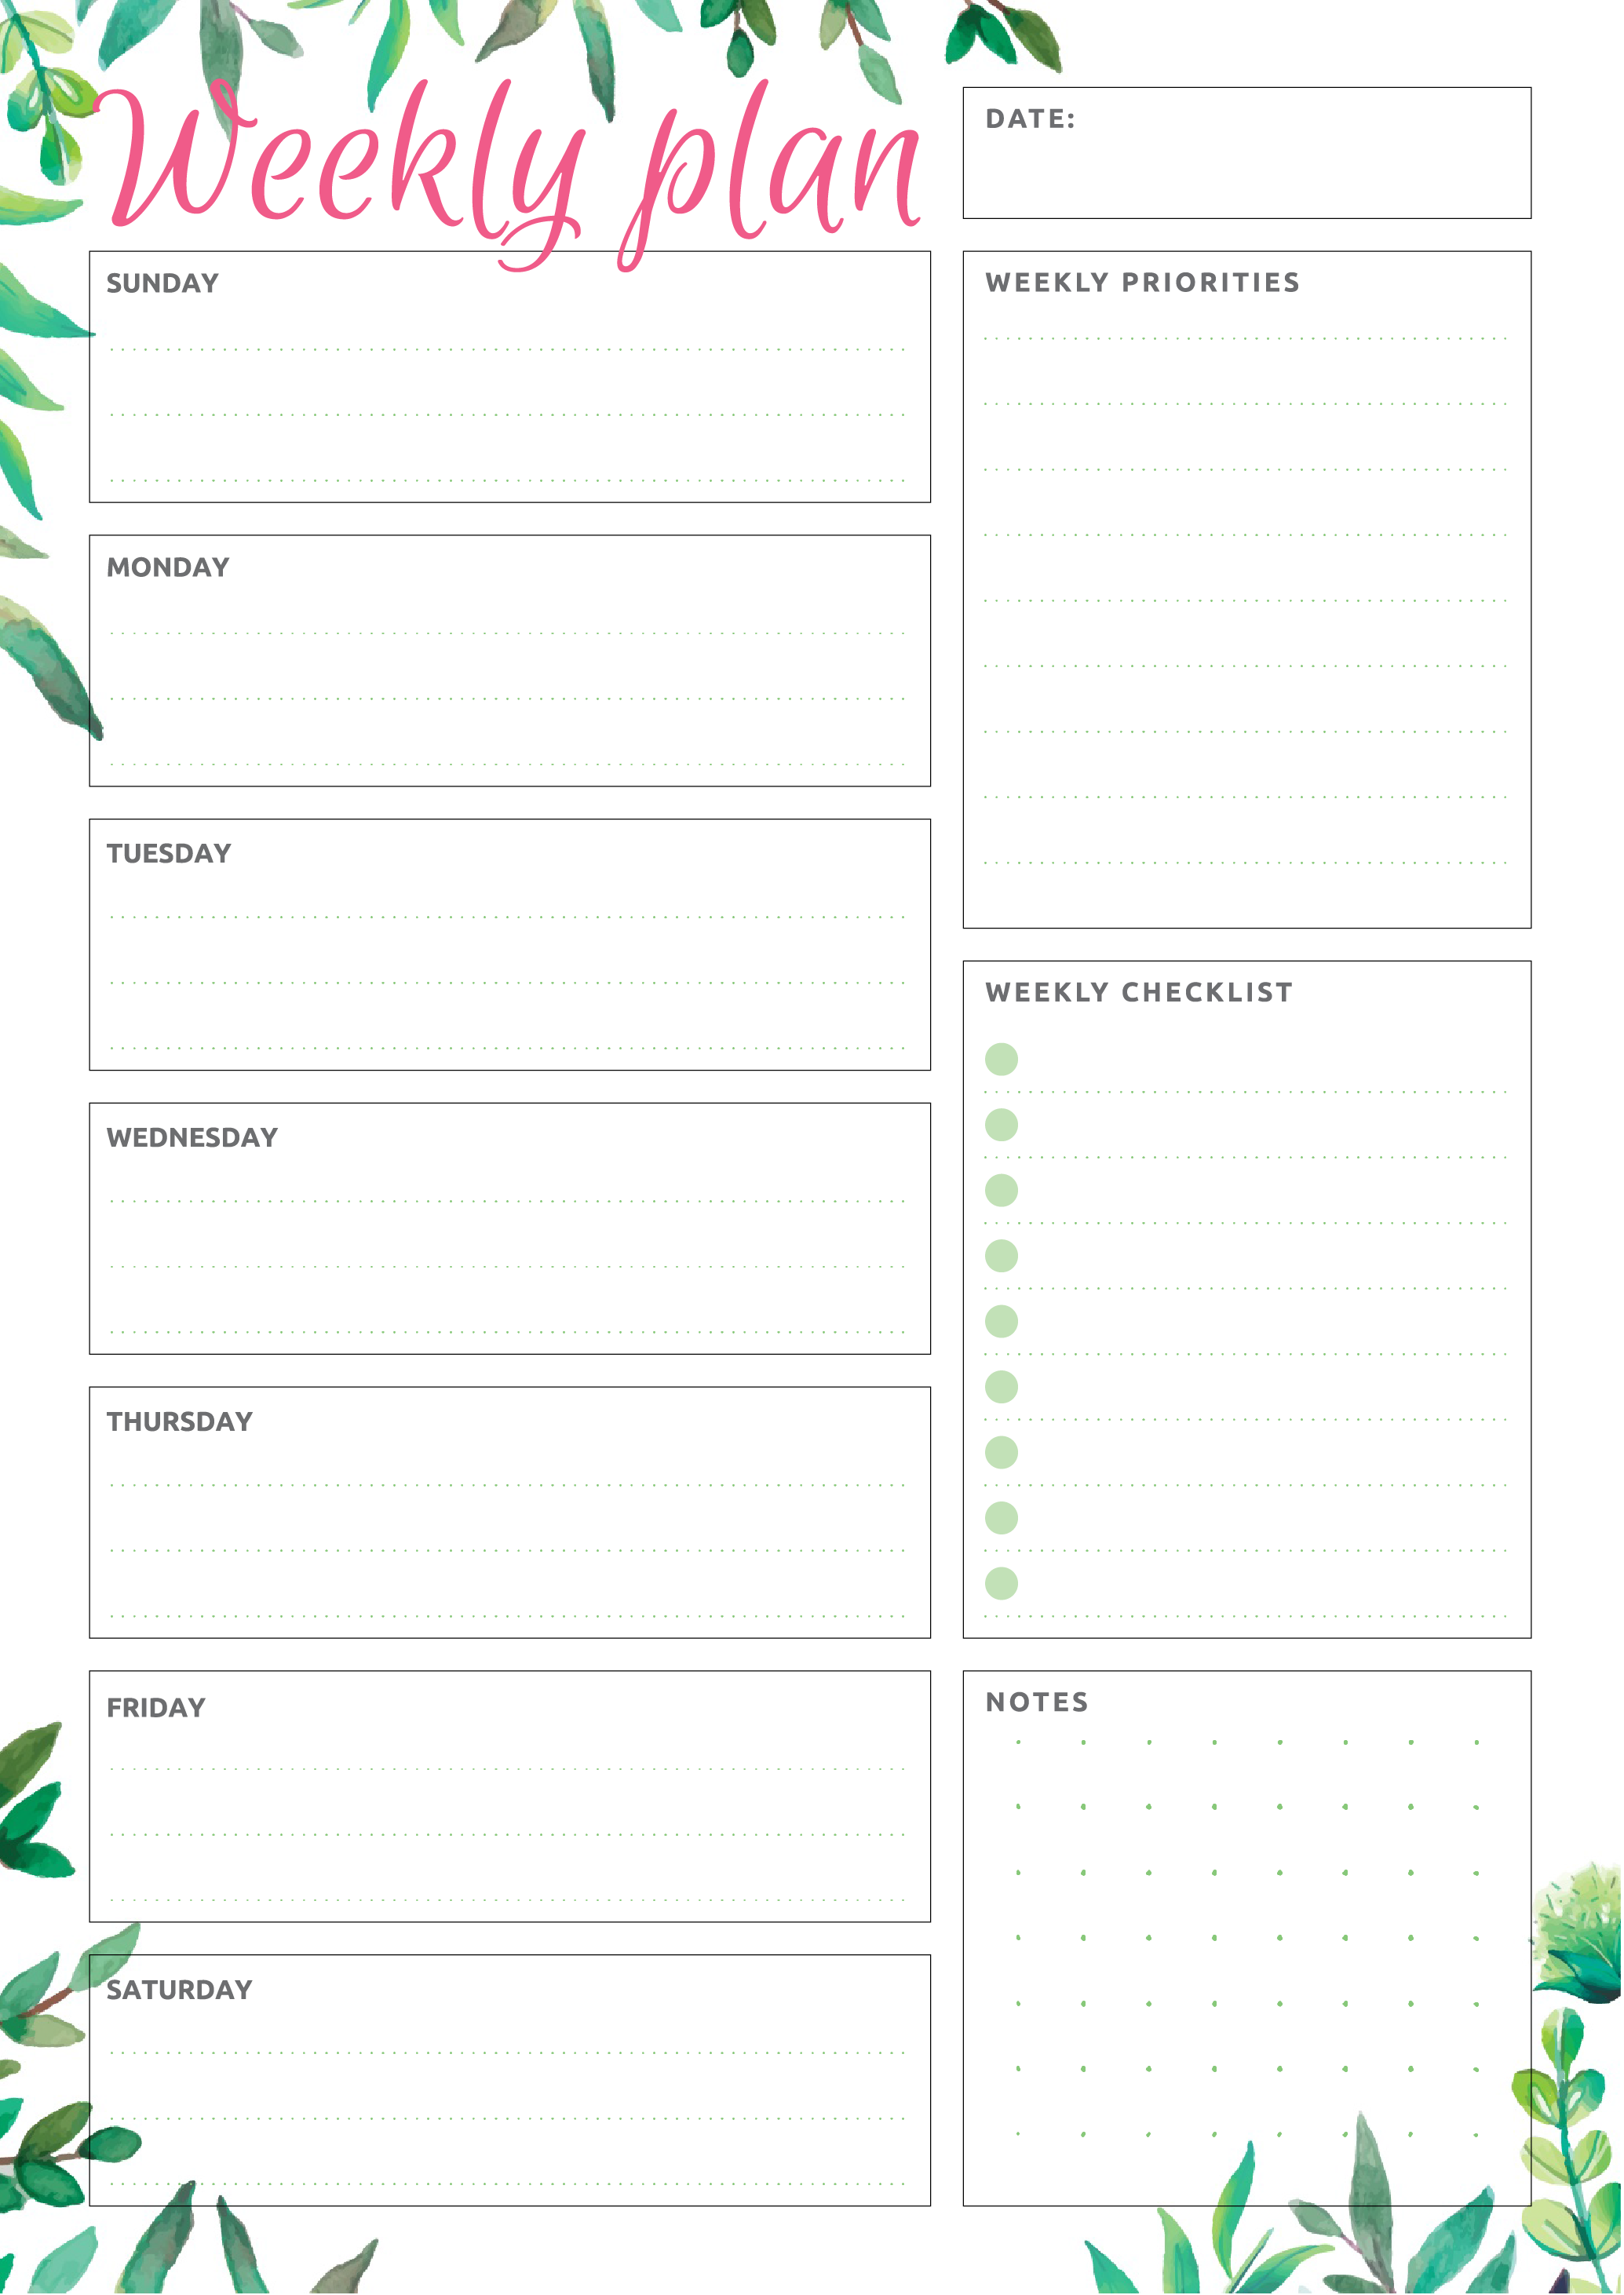 Printable Weekly Plan Checklist PDF Download Weekly Planner